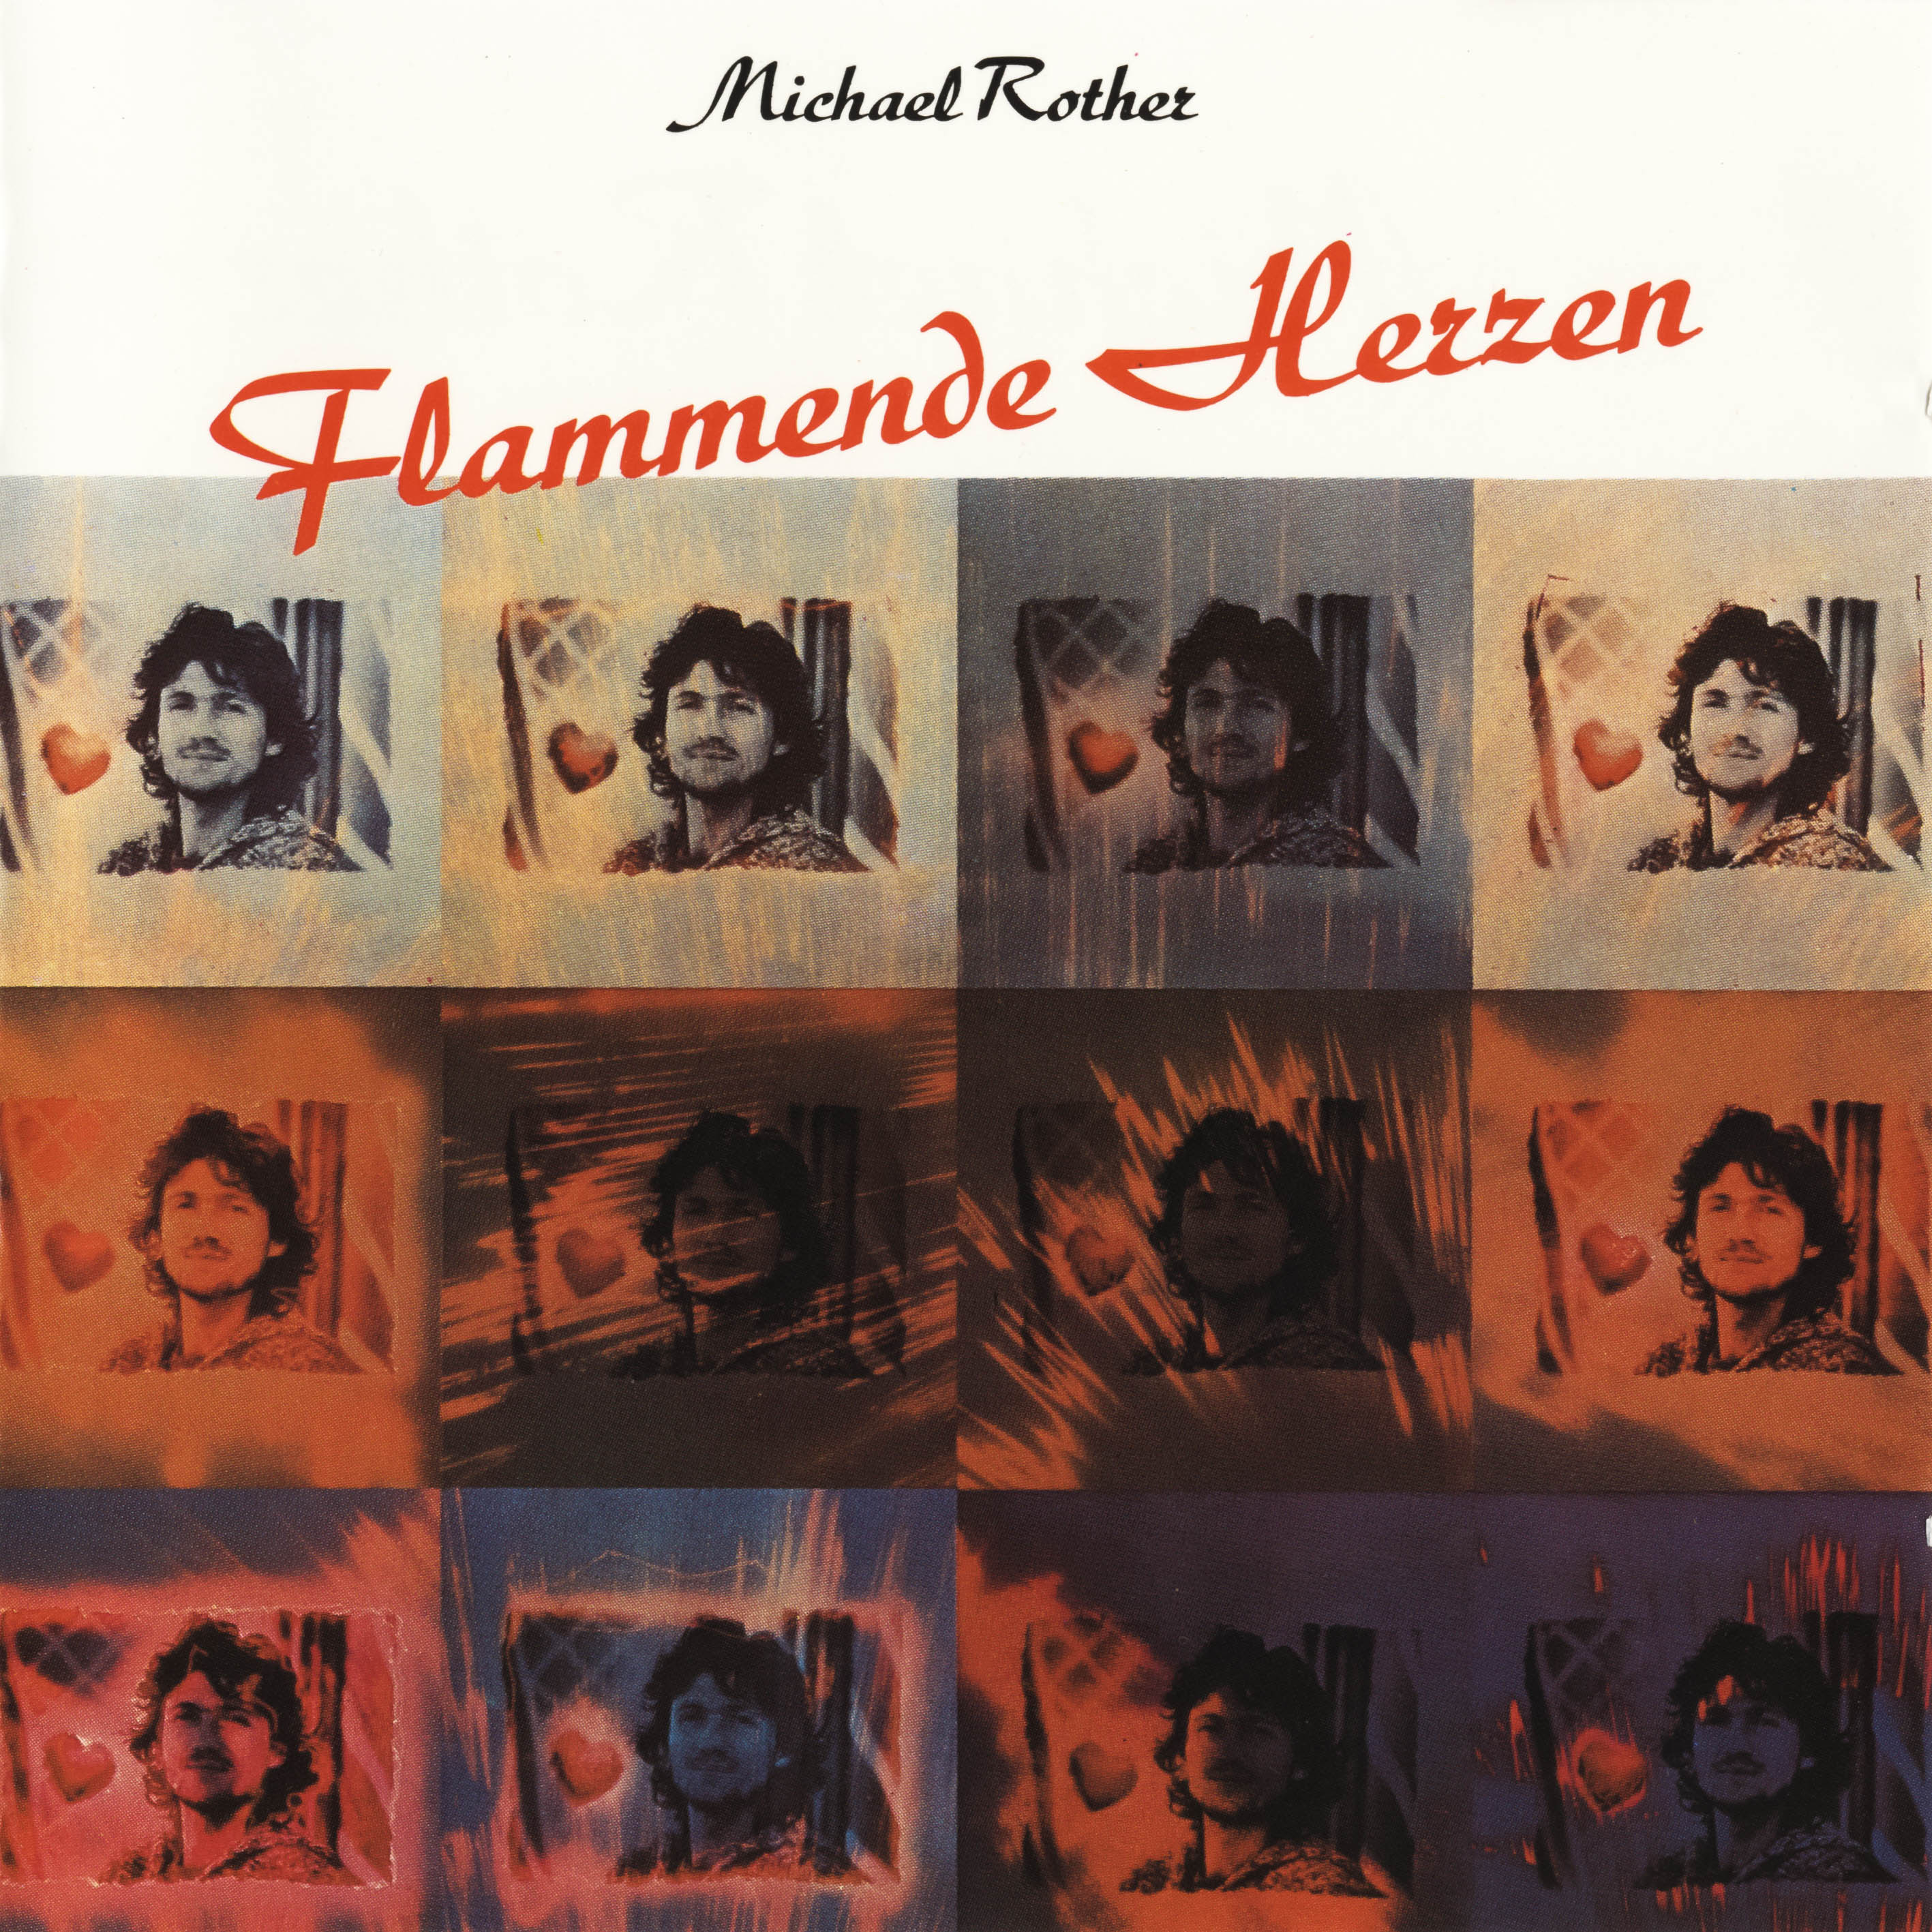 Release “Flammende Herzen” by Michael Rother - MusicBrainz